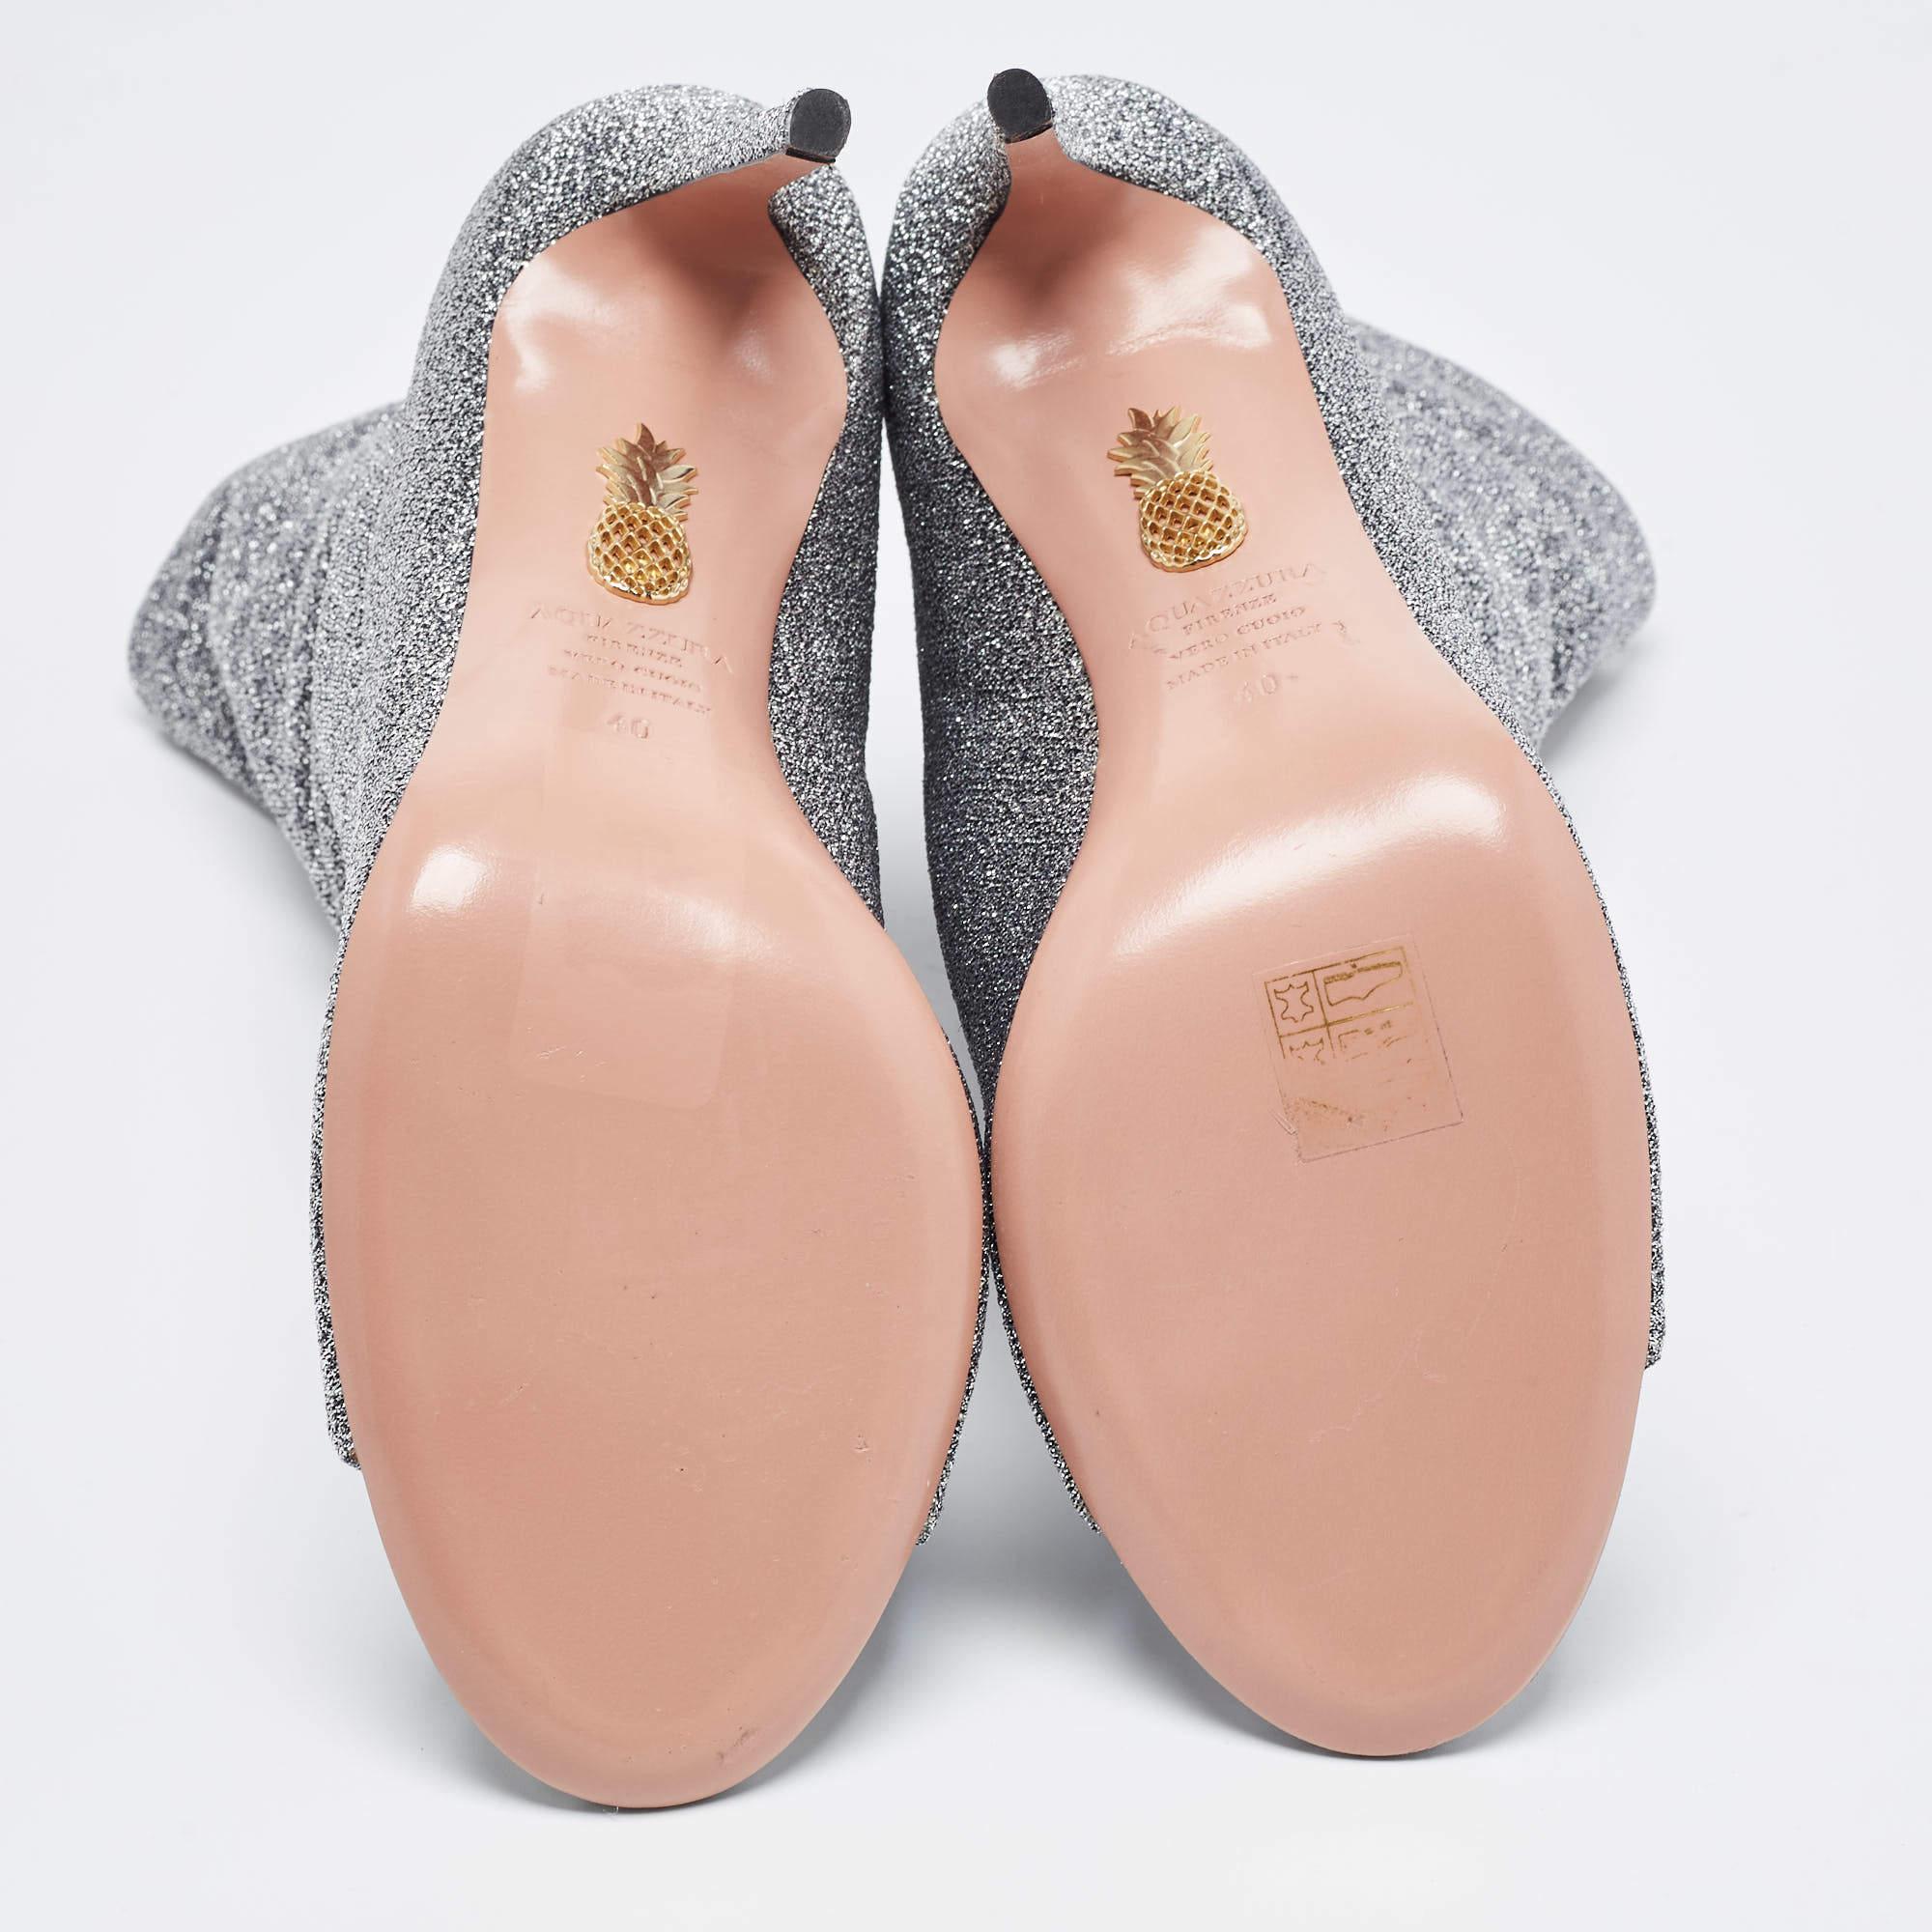 Aquazzura Silver Lurex Fabric Eclair Peep Toe Ankle Boots Size 40 1